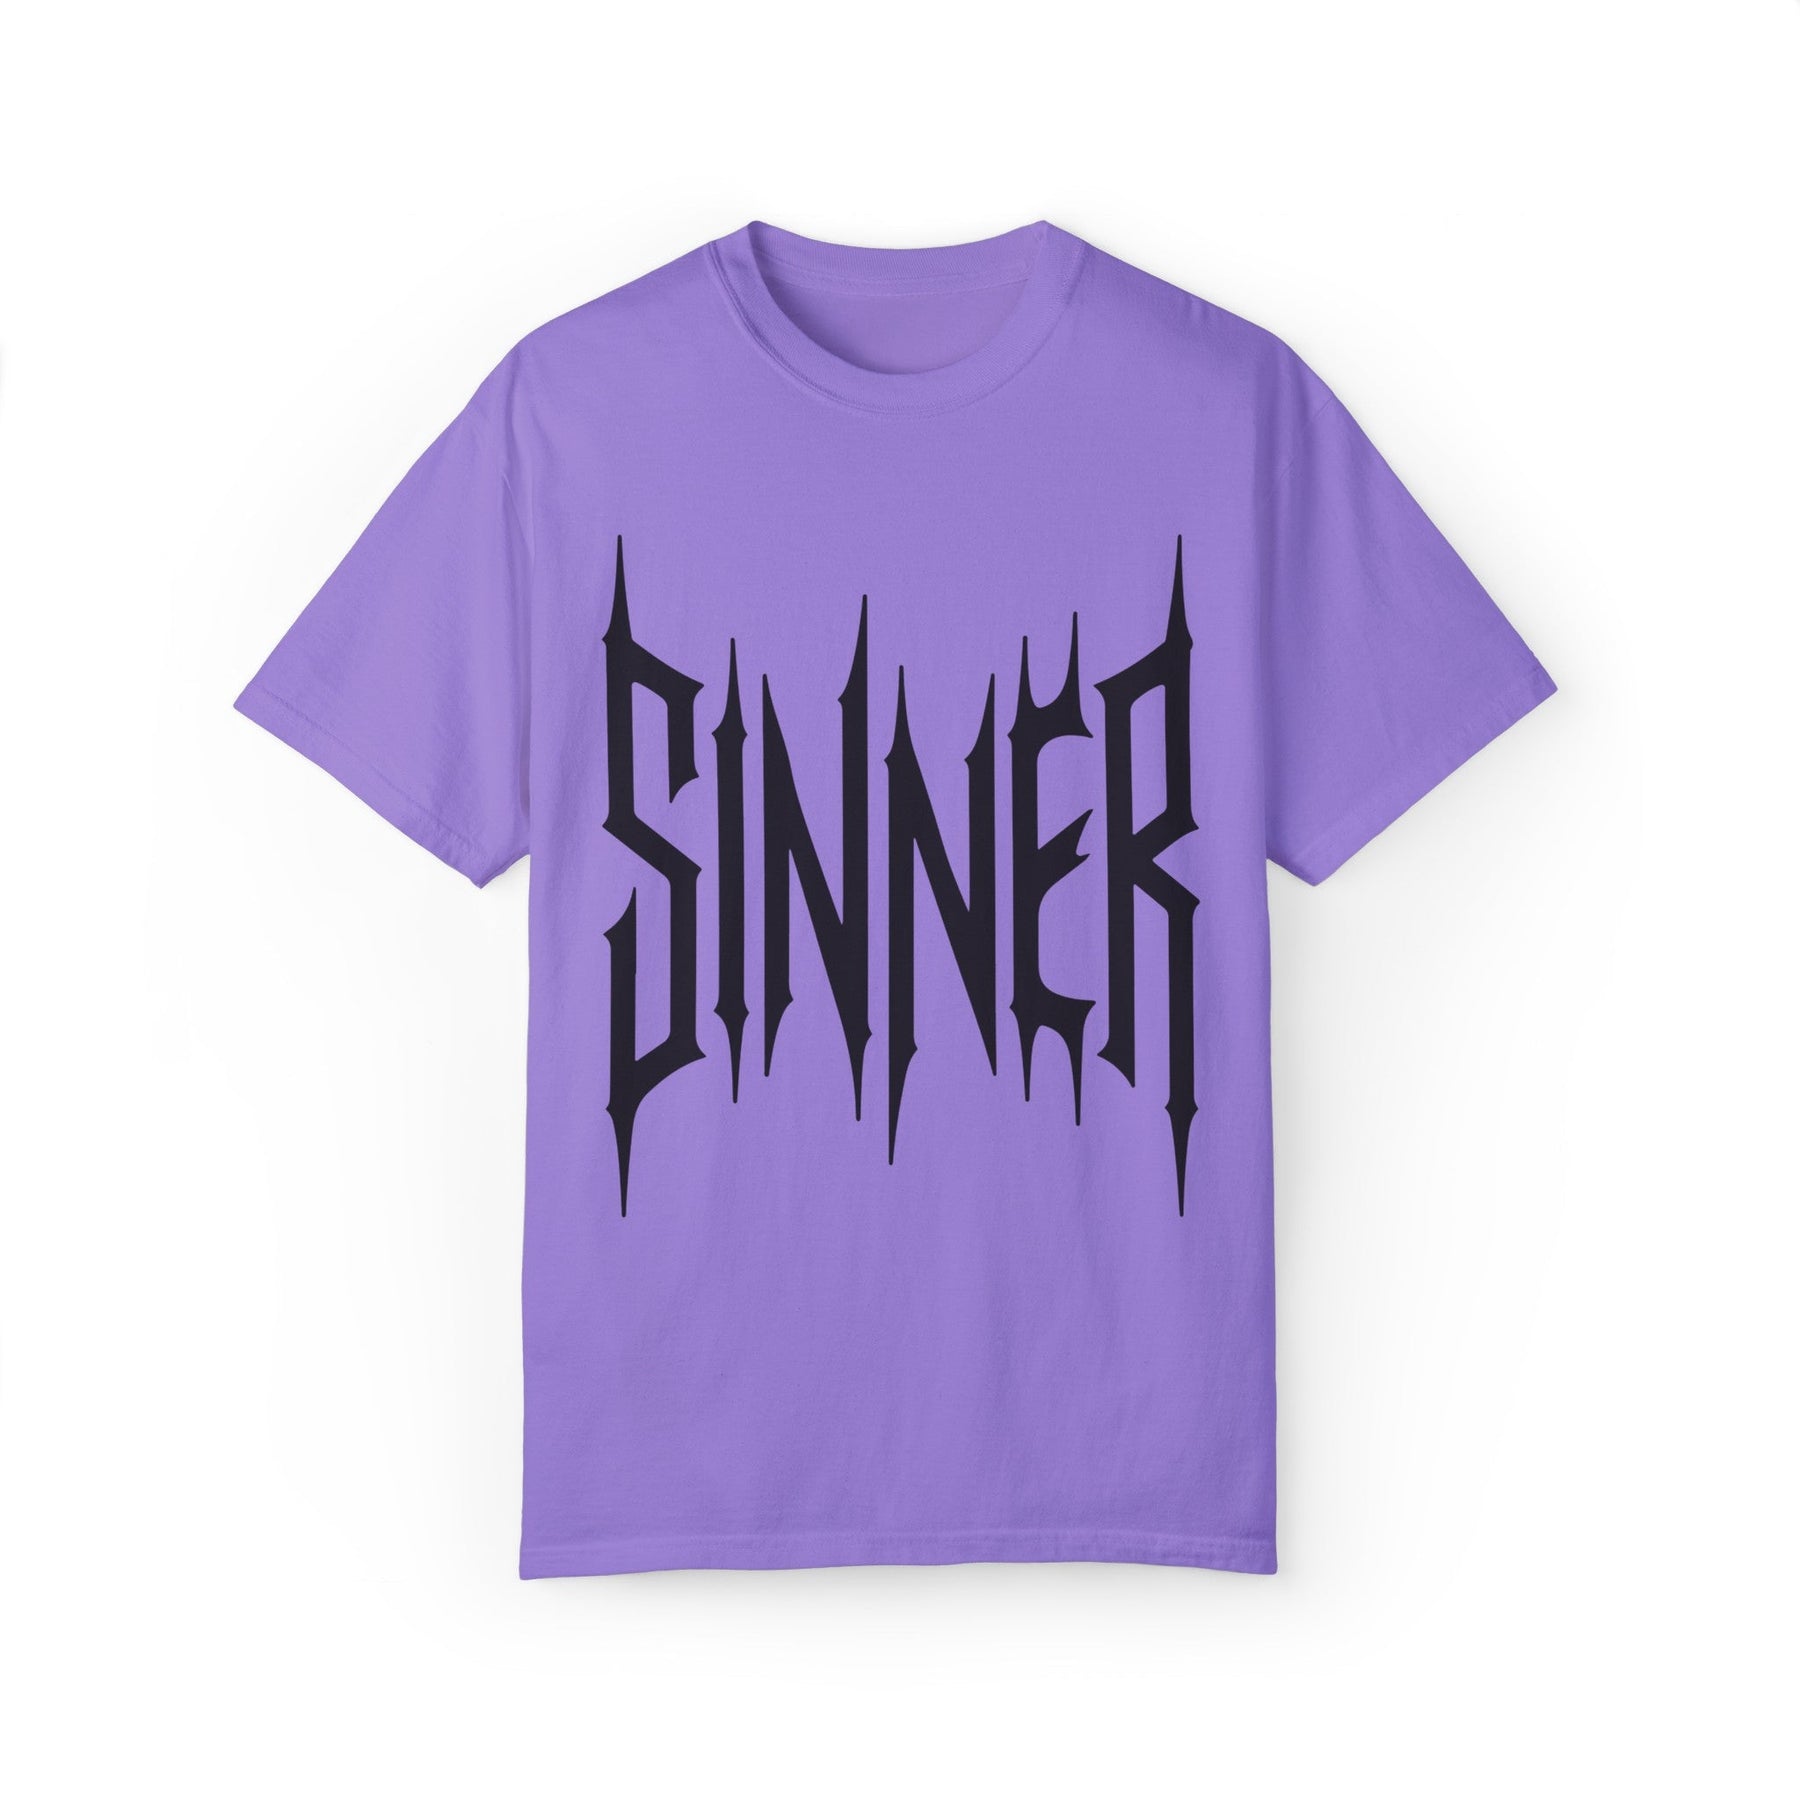 Sinner Oversized Beefy Tee - Goth Cloth Co.T - Shirt14512491985144976095